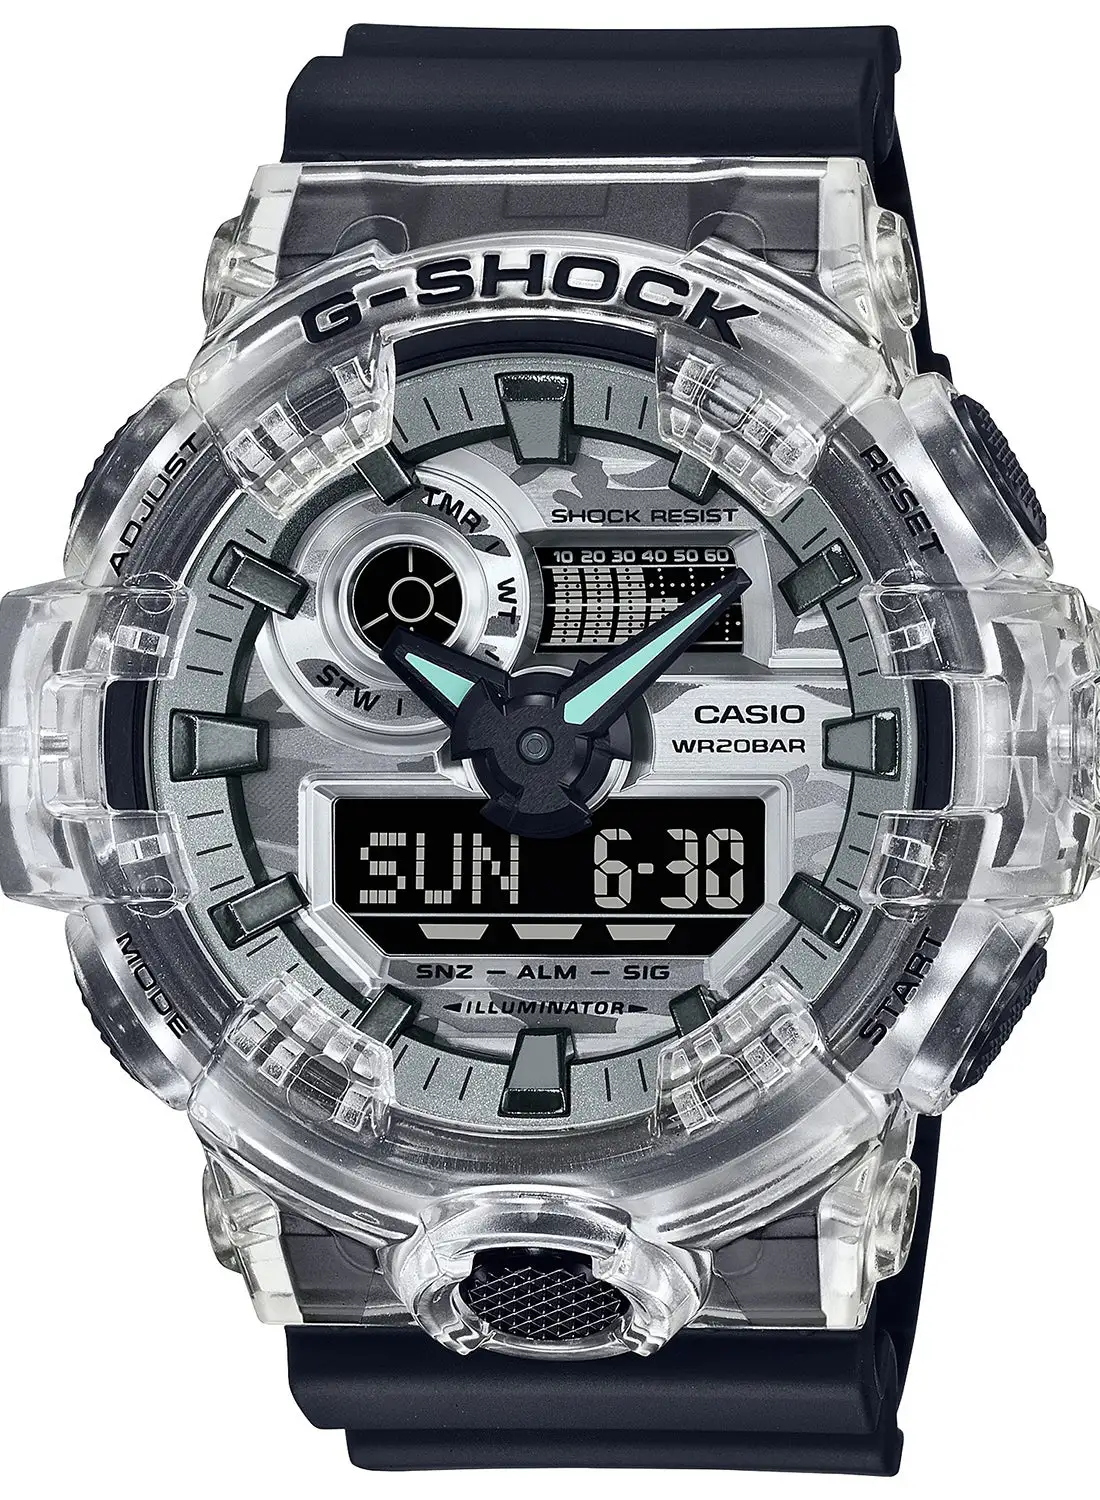 G-SHOCK Men's Analog+Digital Resin Wrist Watch GA-700SKC-1ADR - 45 Mm